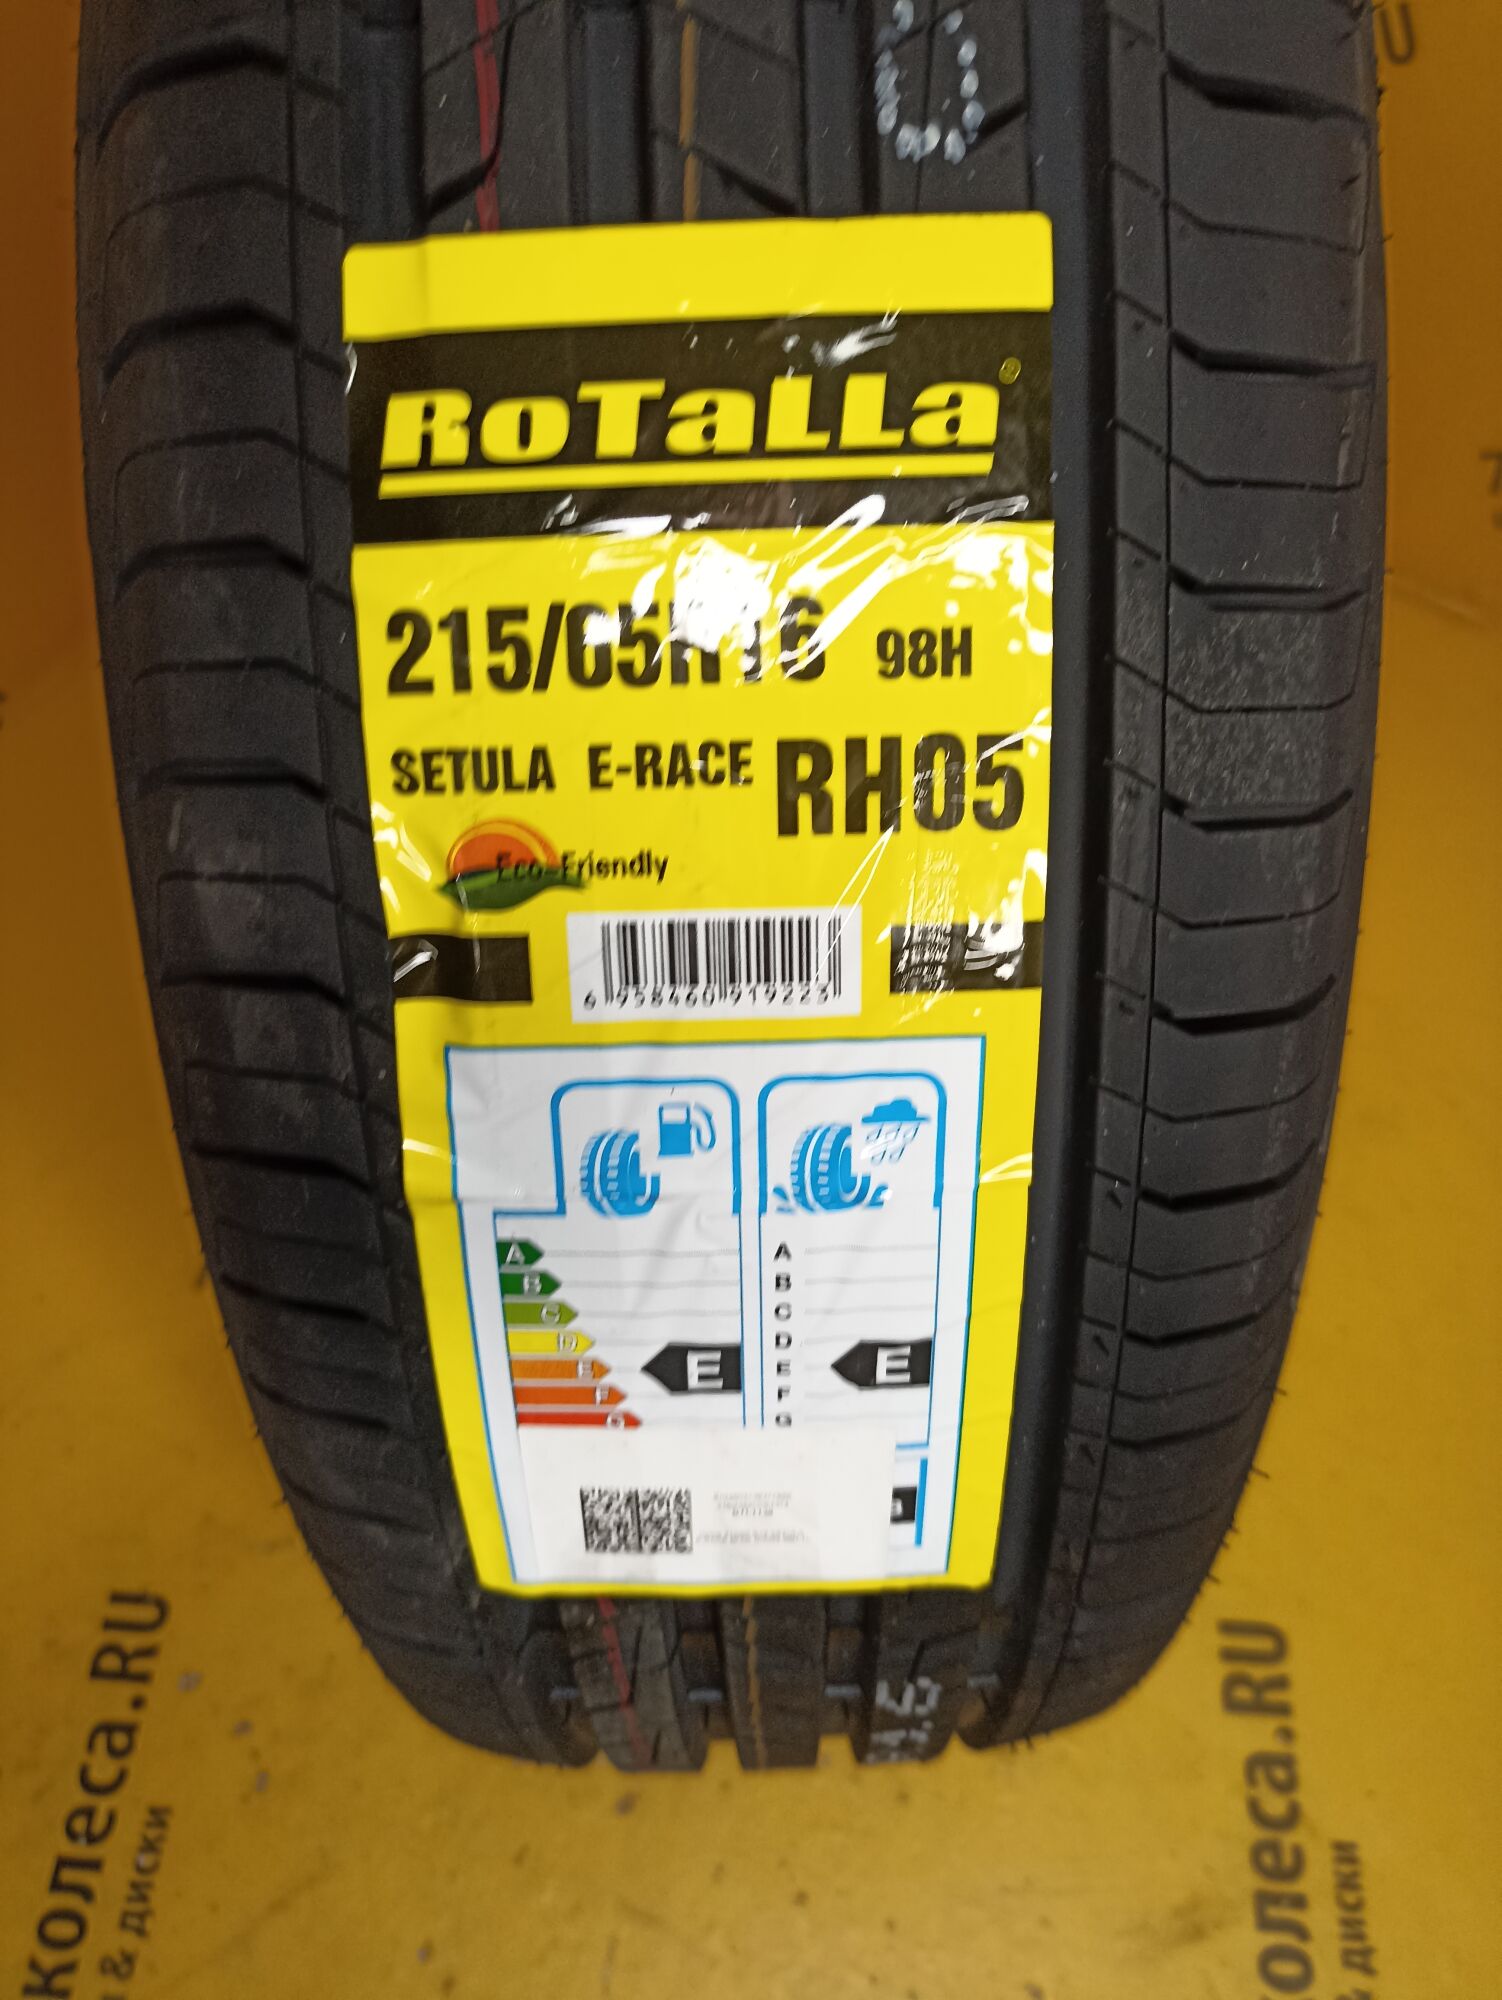 Rotalla setula w race s500. Rotalla Setula e-Race rh05. Rotalla Setula e-Race rh05 215/60 r16. Rotalla шины производитель. 225/55 R16 Rotalla Setula e-Race rh01 XL 99w TL.